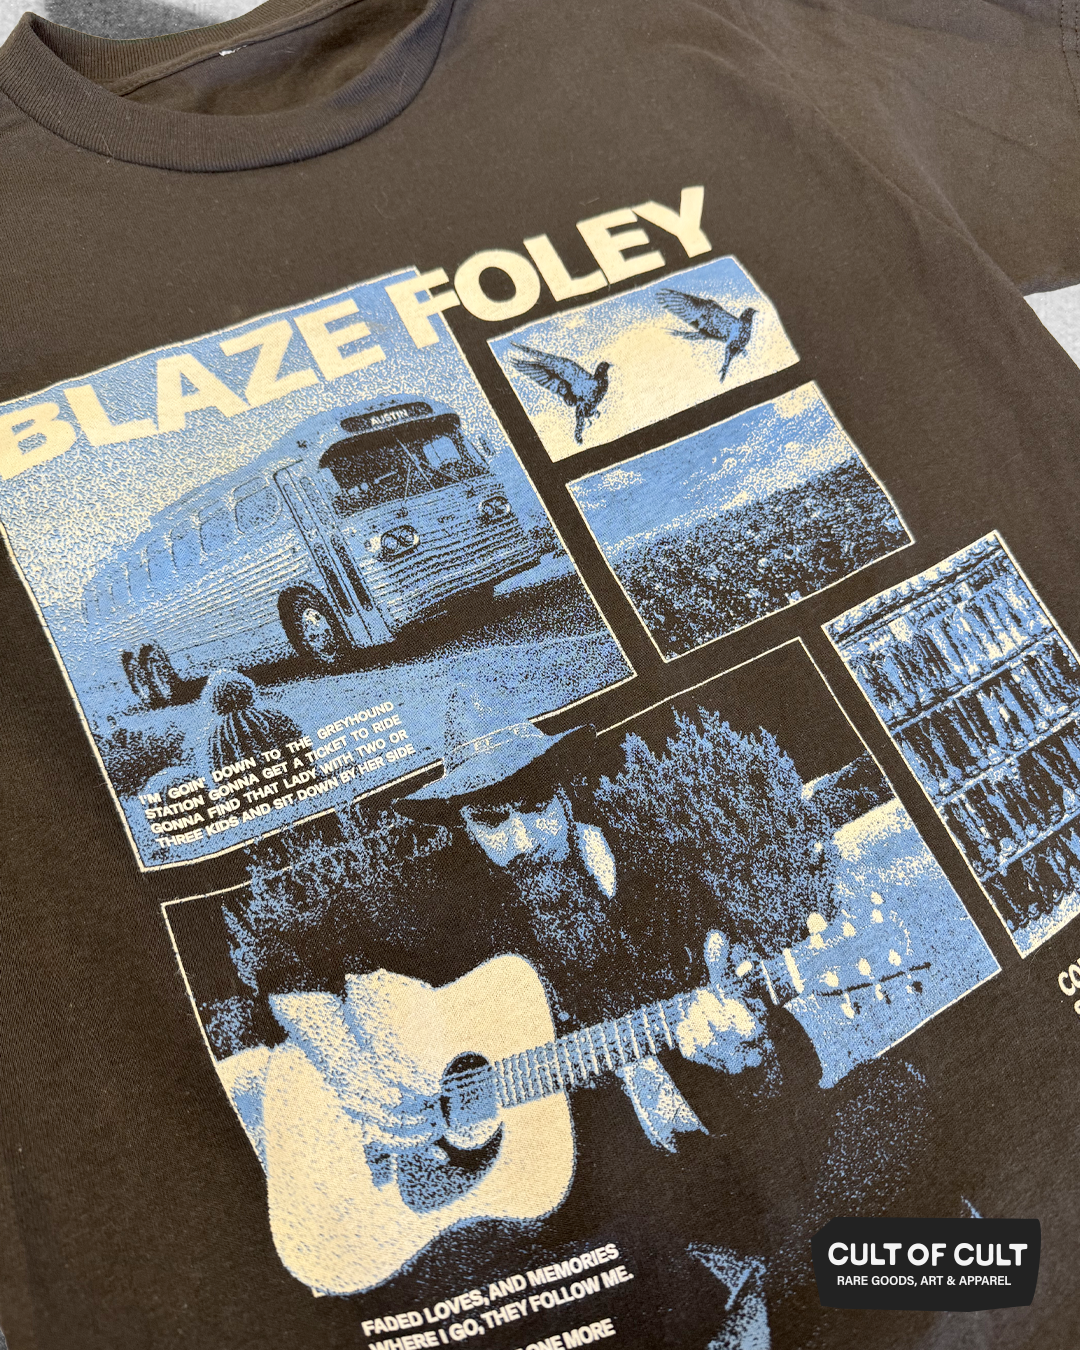 Blaze Foley Clay Pigeons T-Shirt